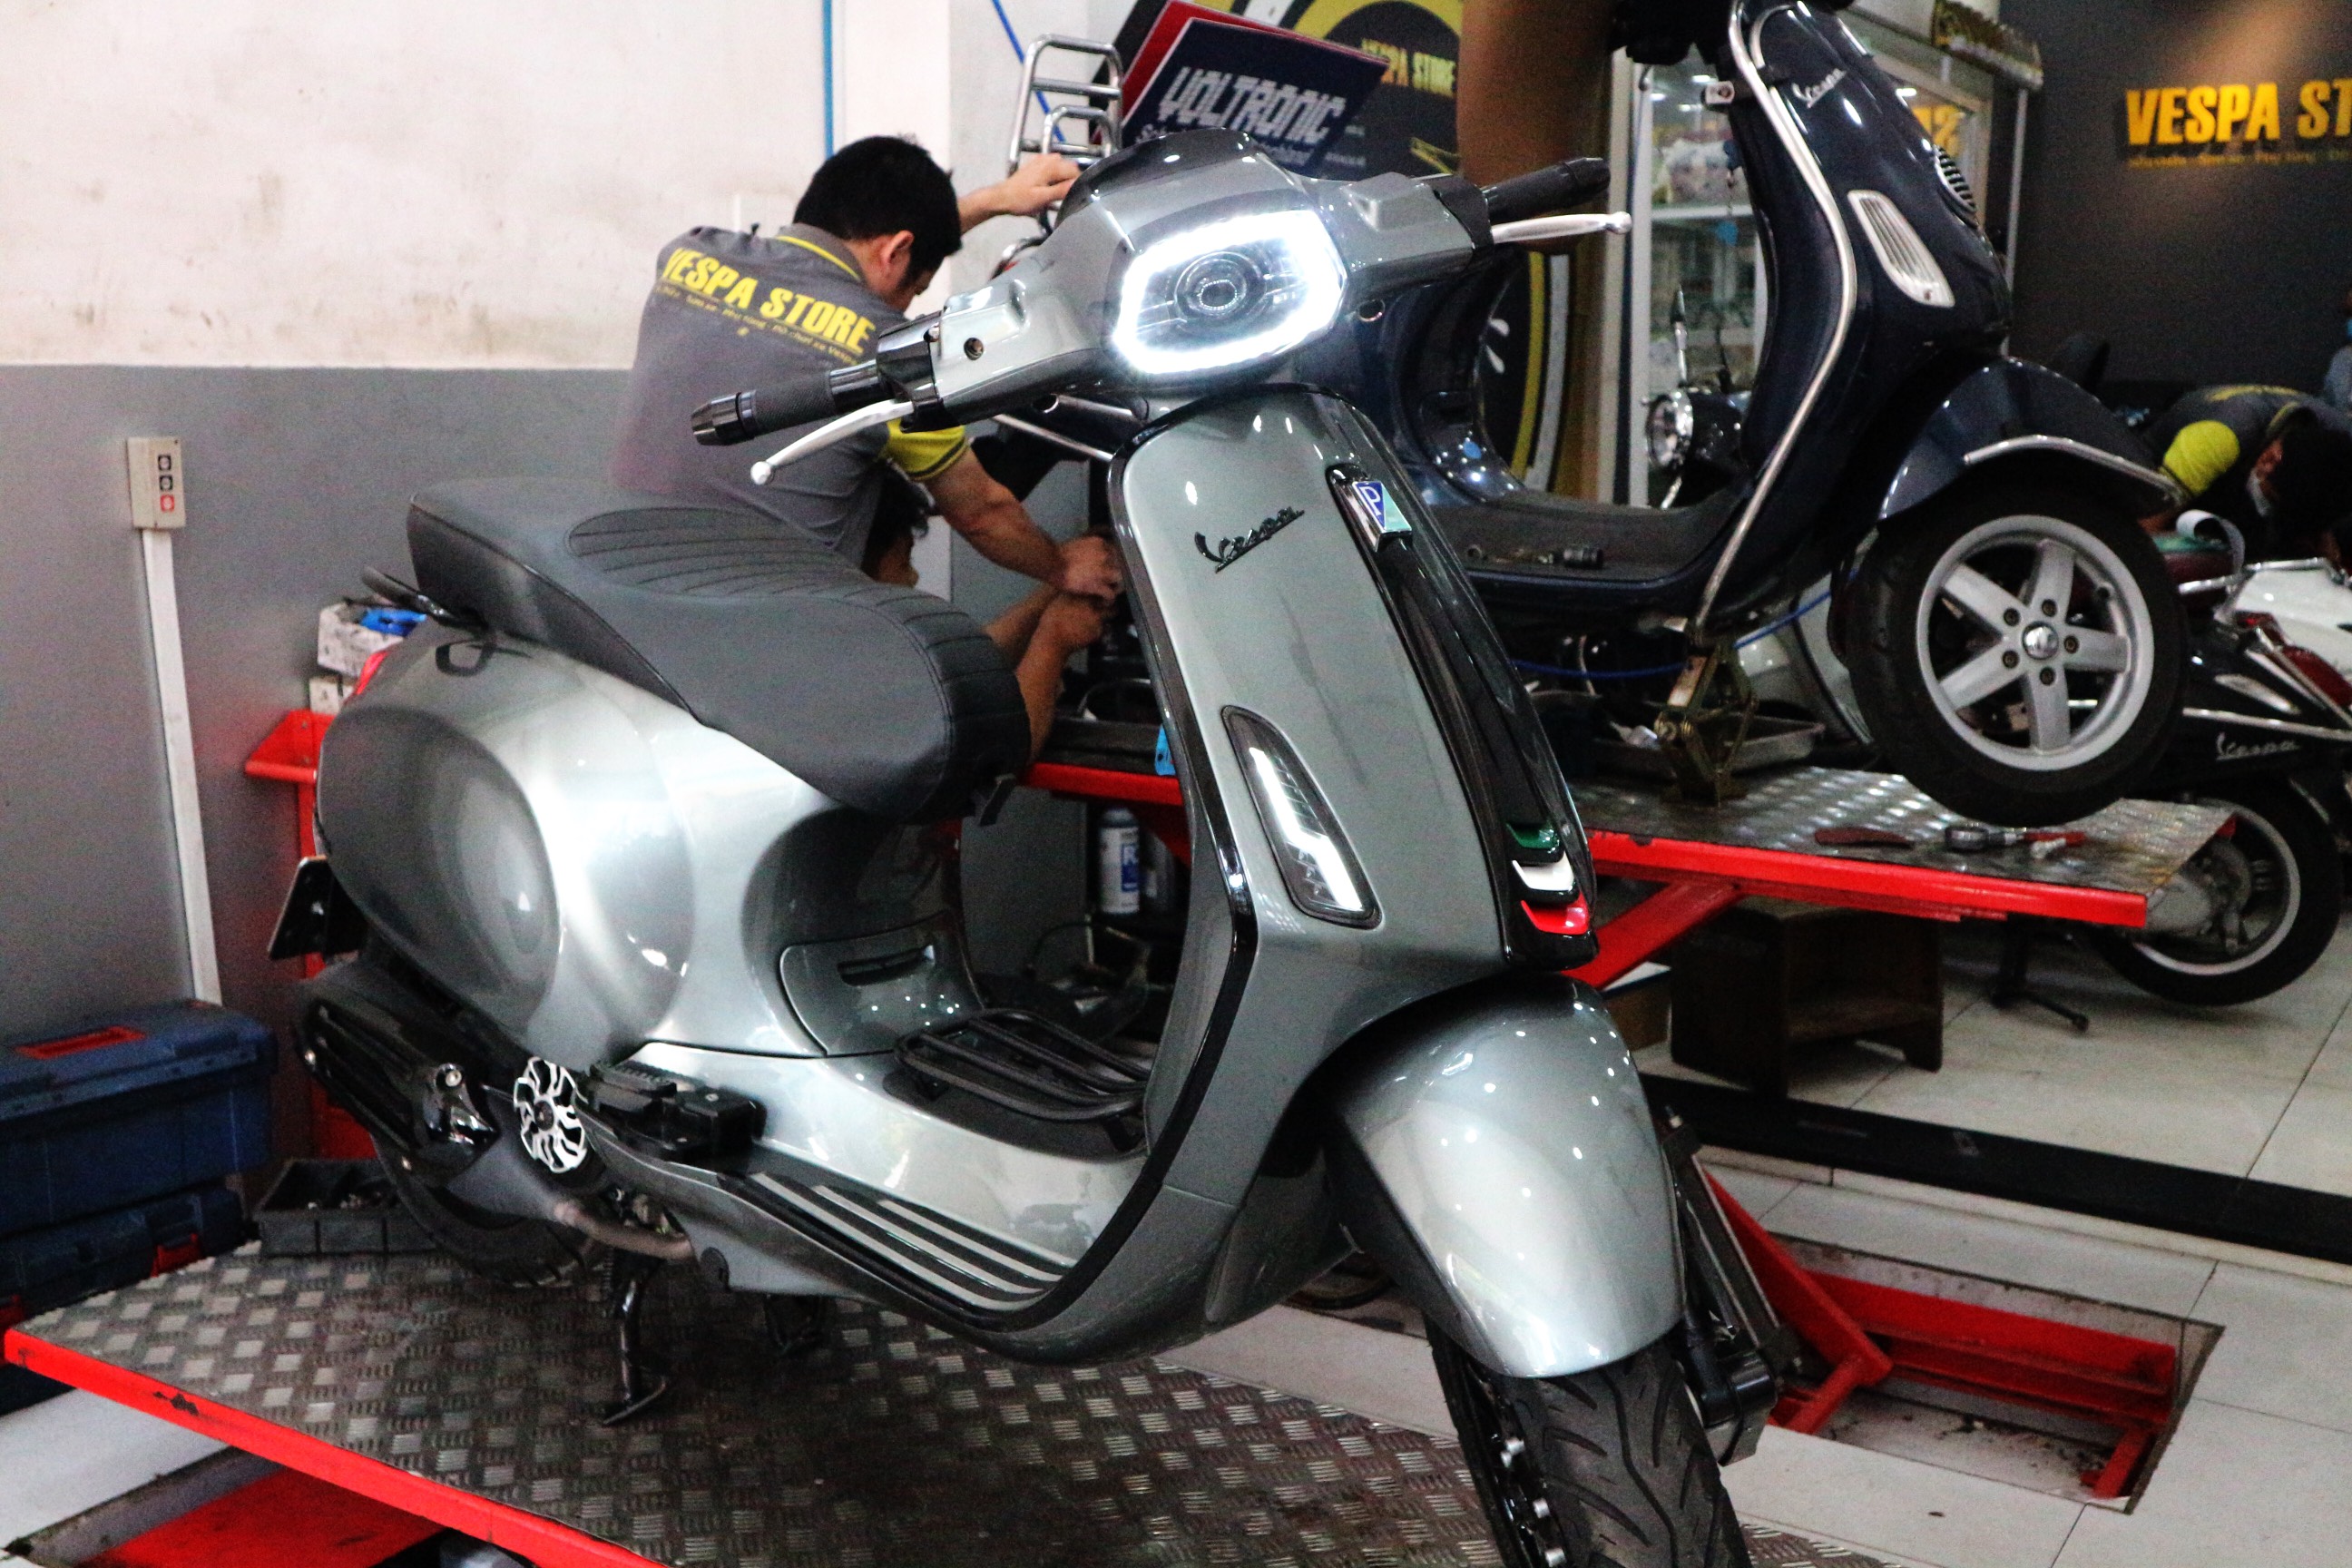 Pad hạ phuộc Maru model 2020 cho Vespa  Moto Ride Parts  Facebook